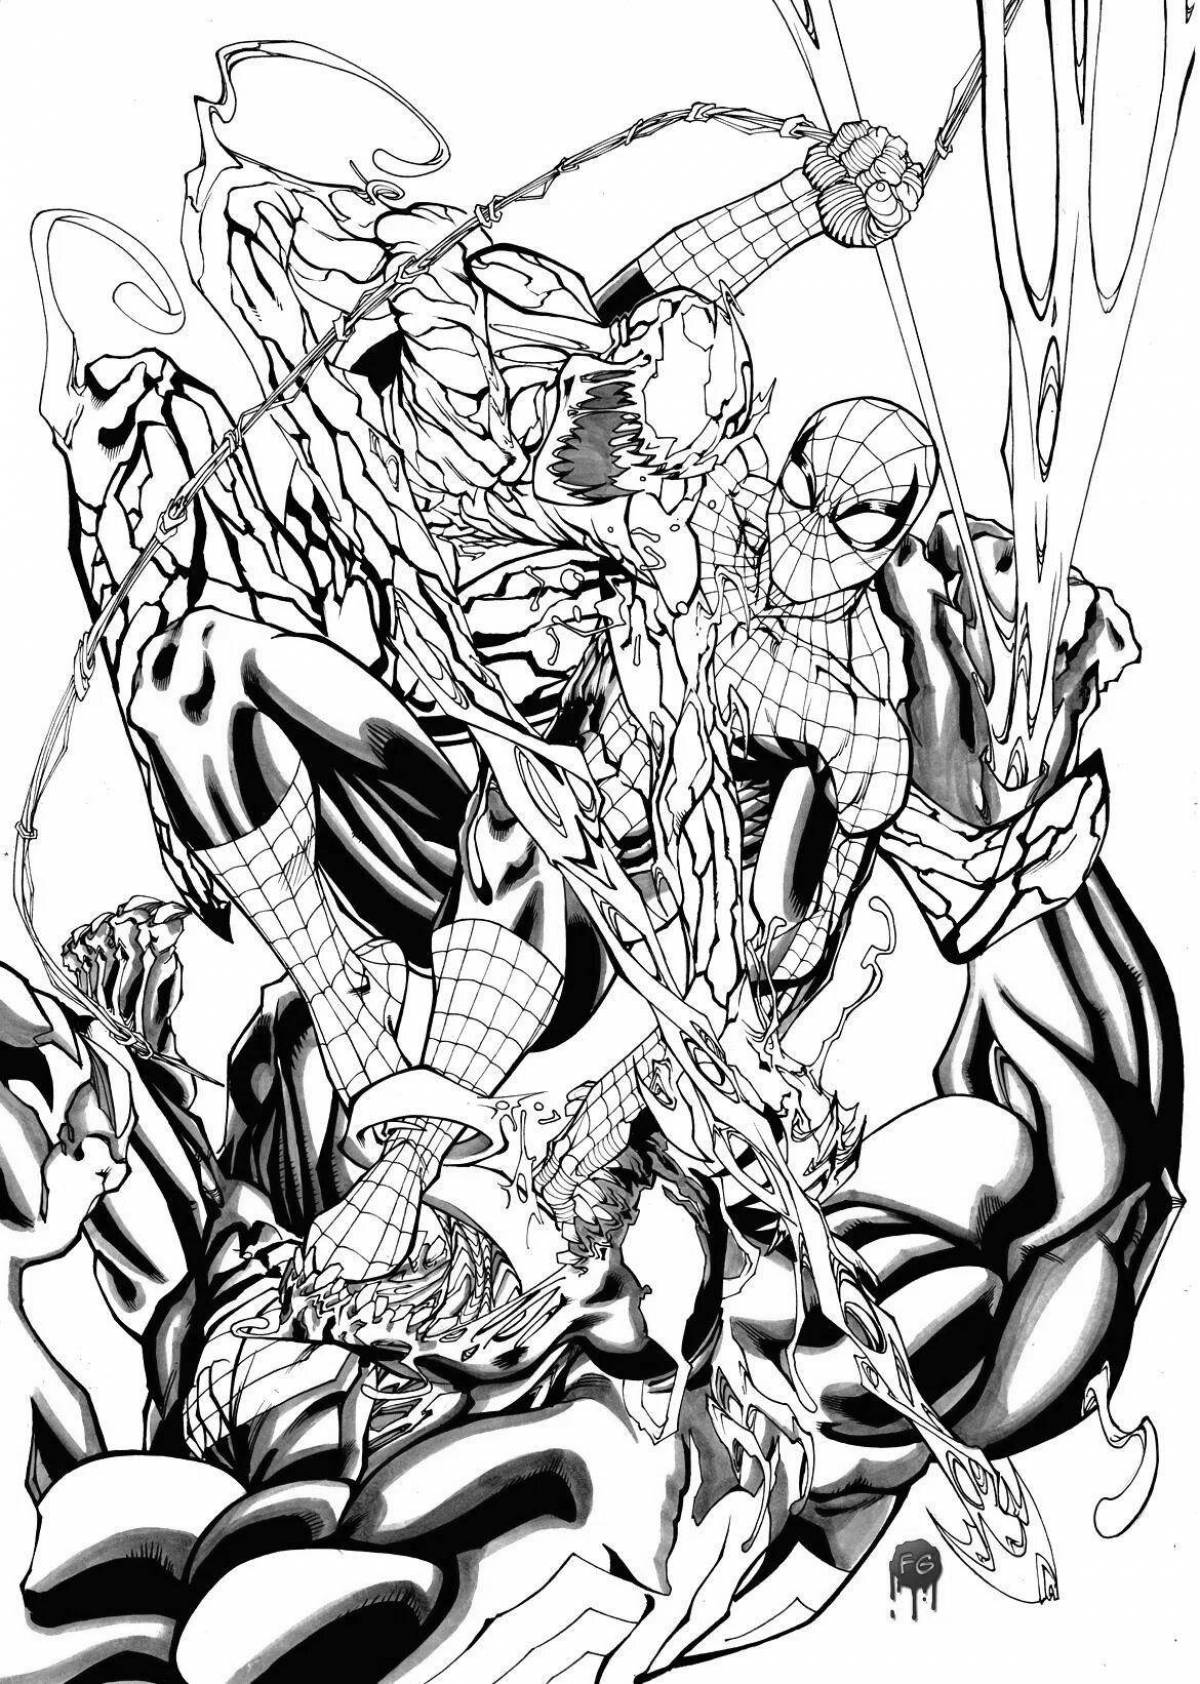 Awesome Spiderman vs Venom coloring book